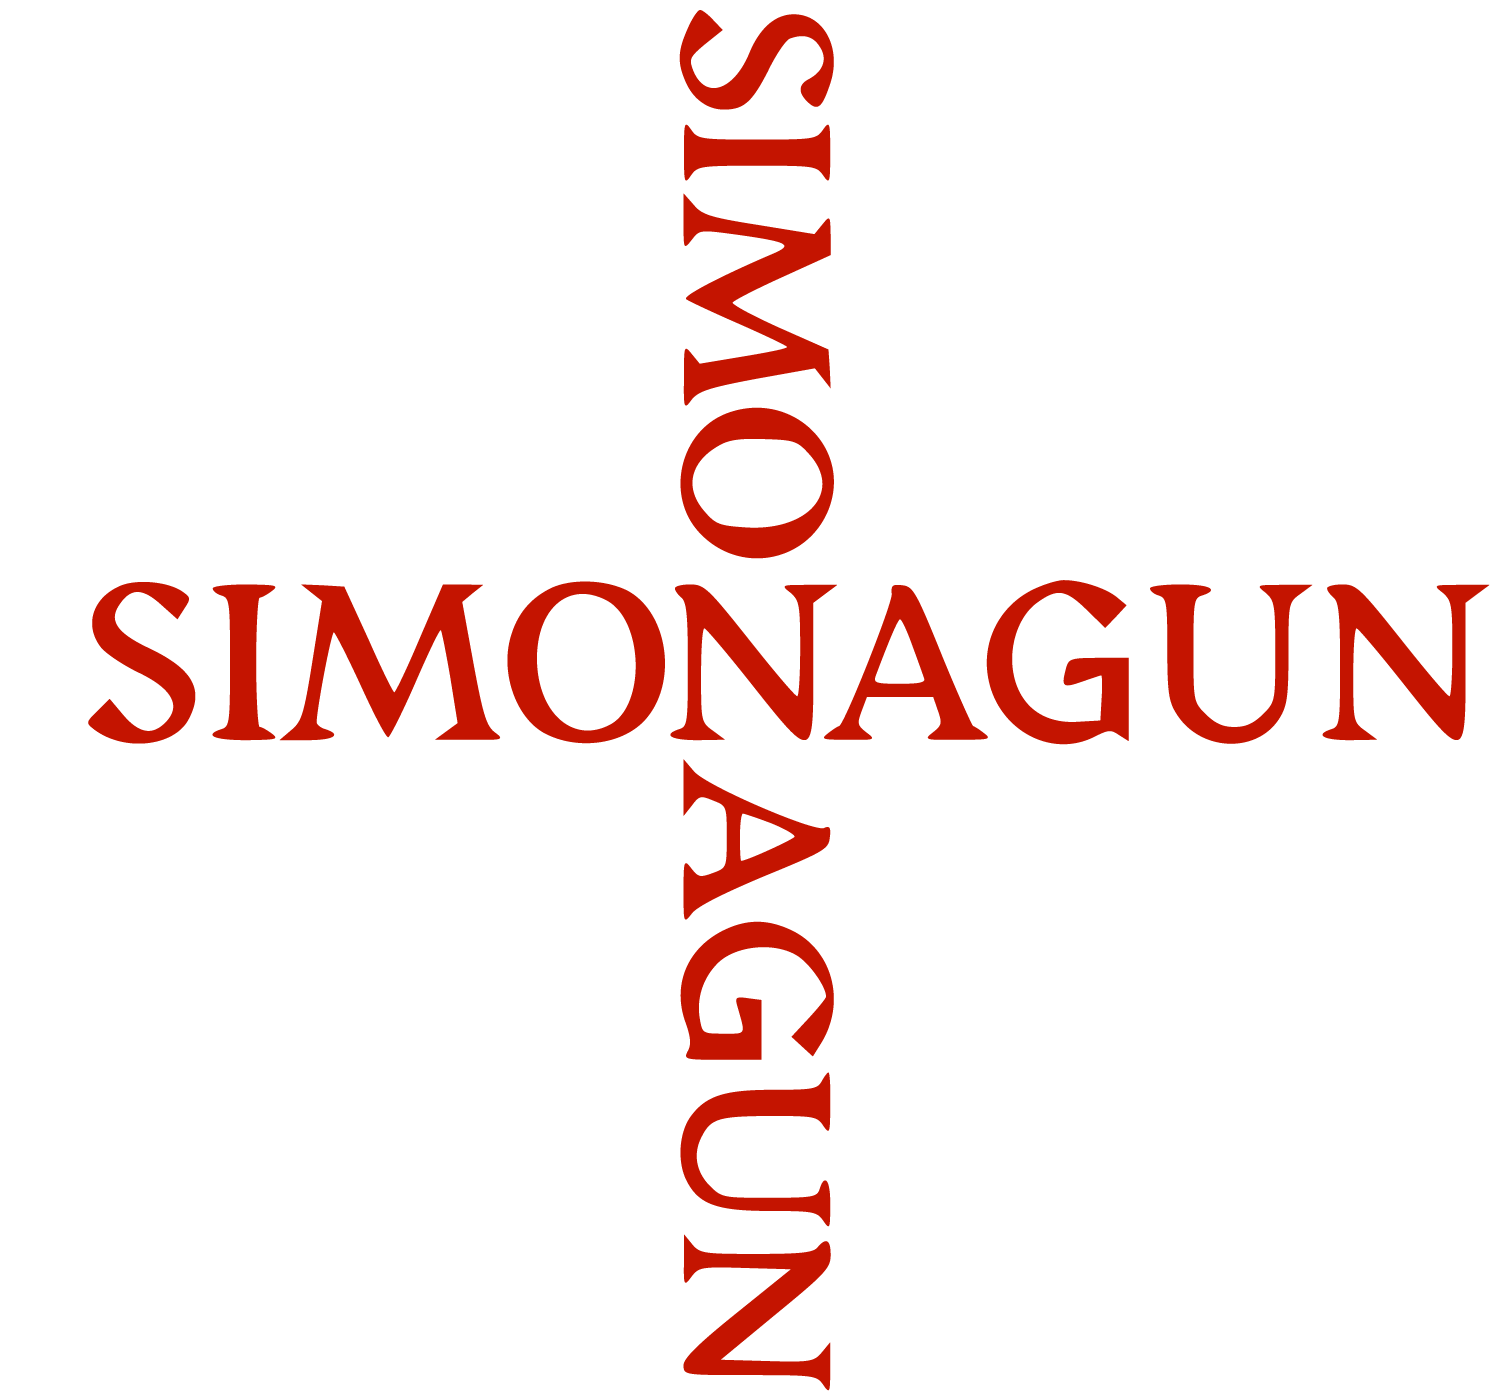 SimonaGun